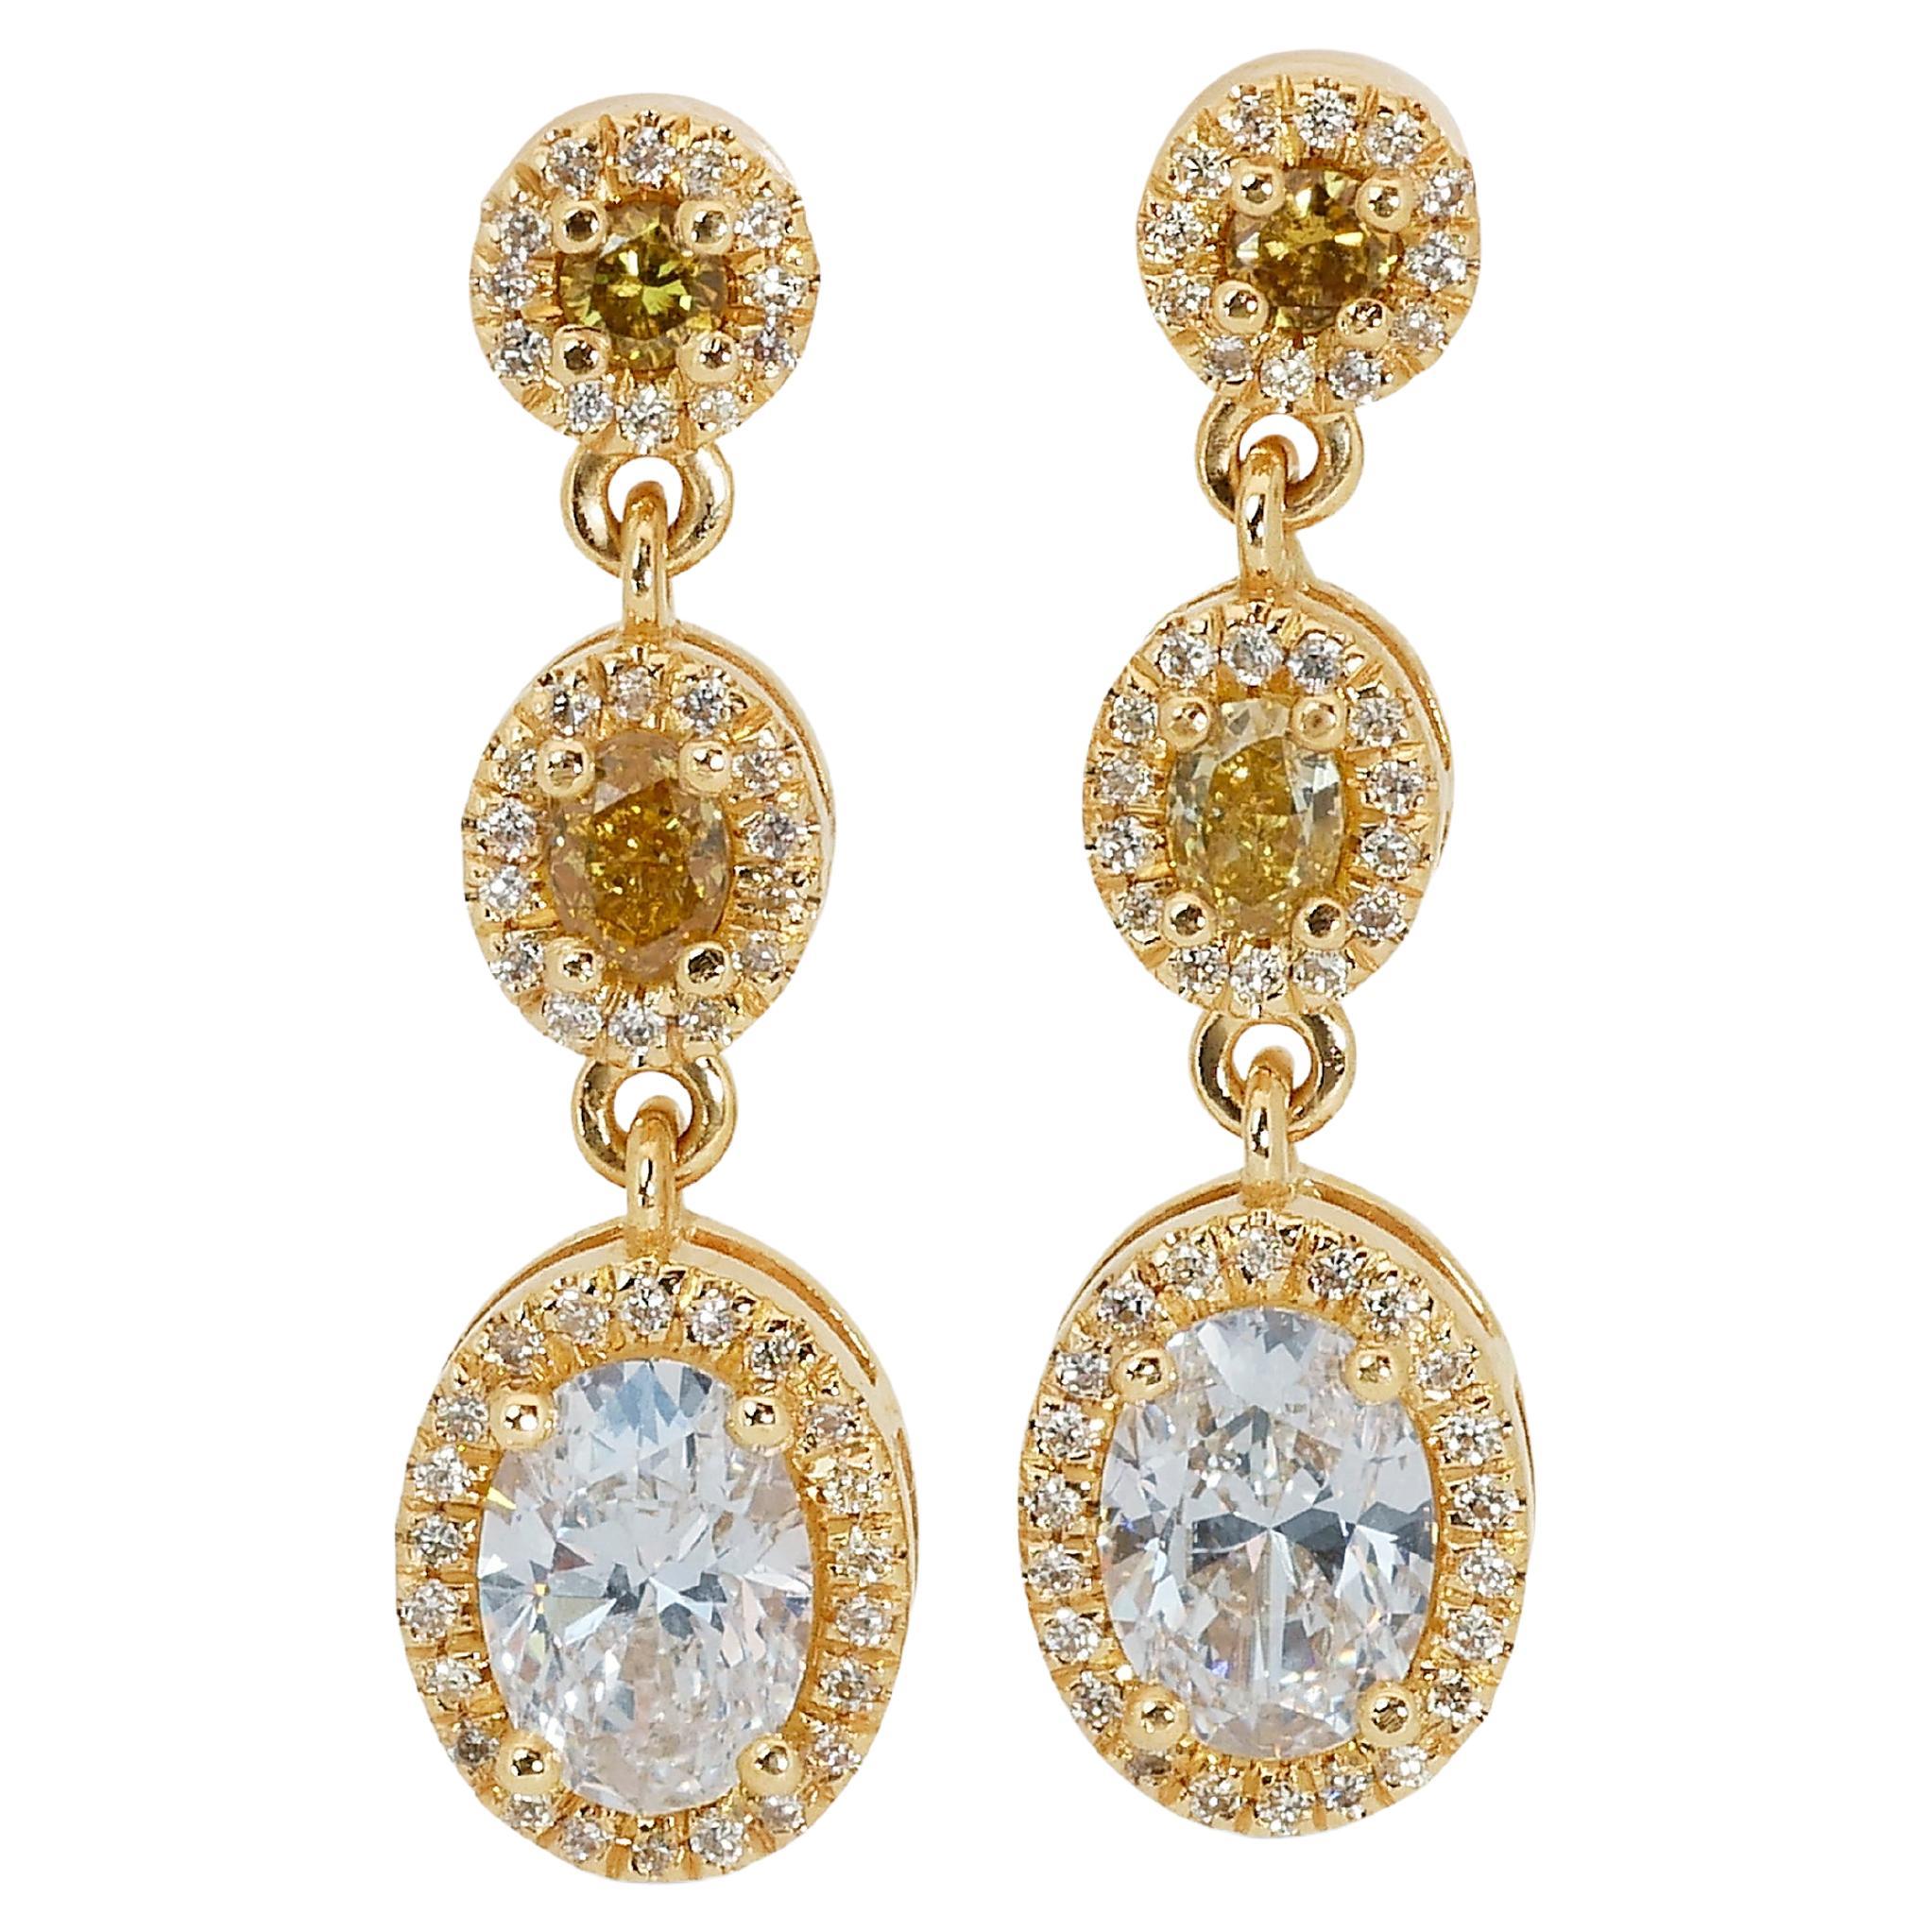 18k Yellow Gold Fancy Drop Earrings w/ 2.18 Carat Natural Diamonds IGI Cert For Sale